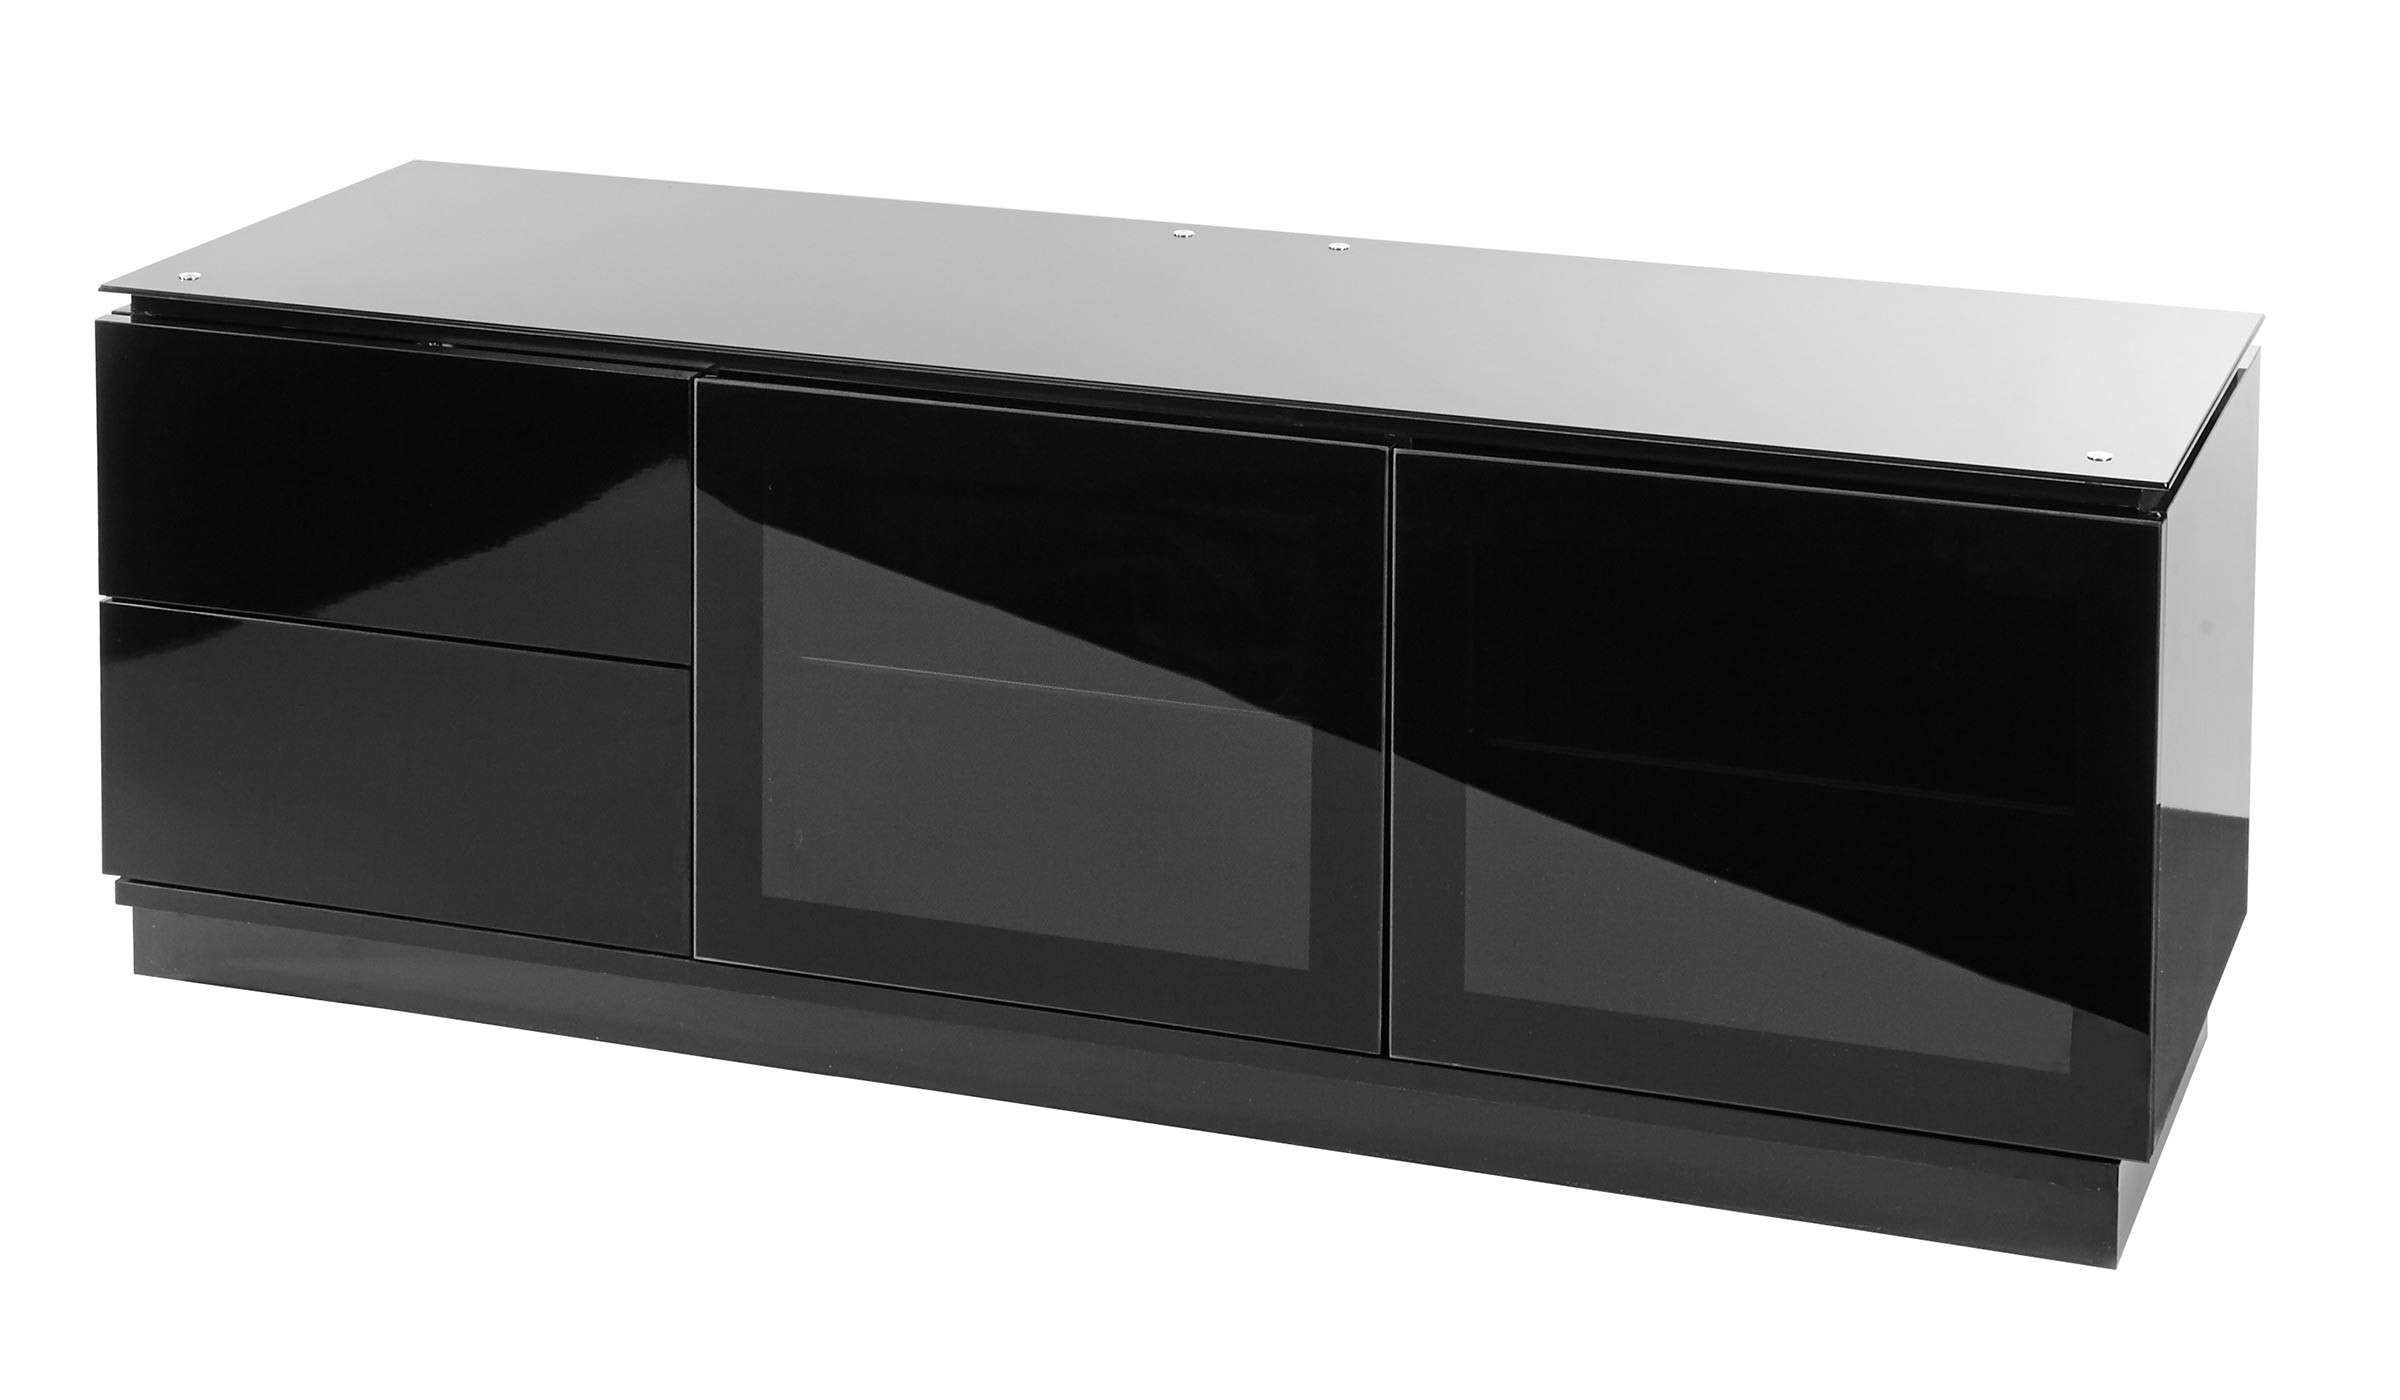 Black Gloss Tv Cabinet Up To 65" Tv | Casino Mmt C1500b For Black Gloss Tv Cabinets (View 3 of 20)